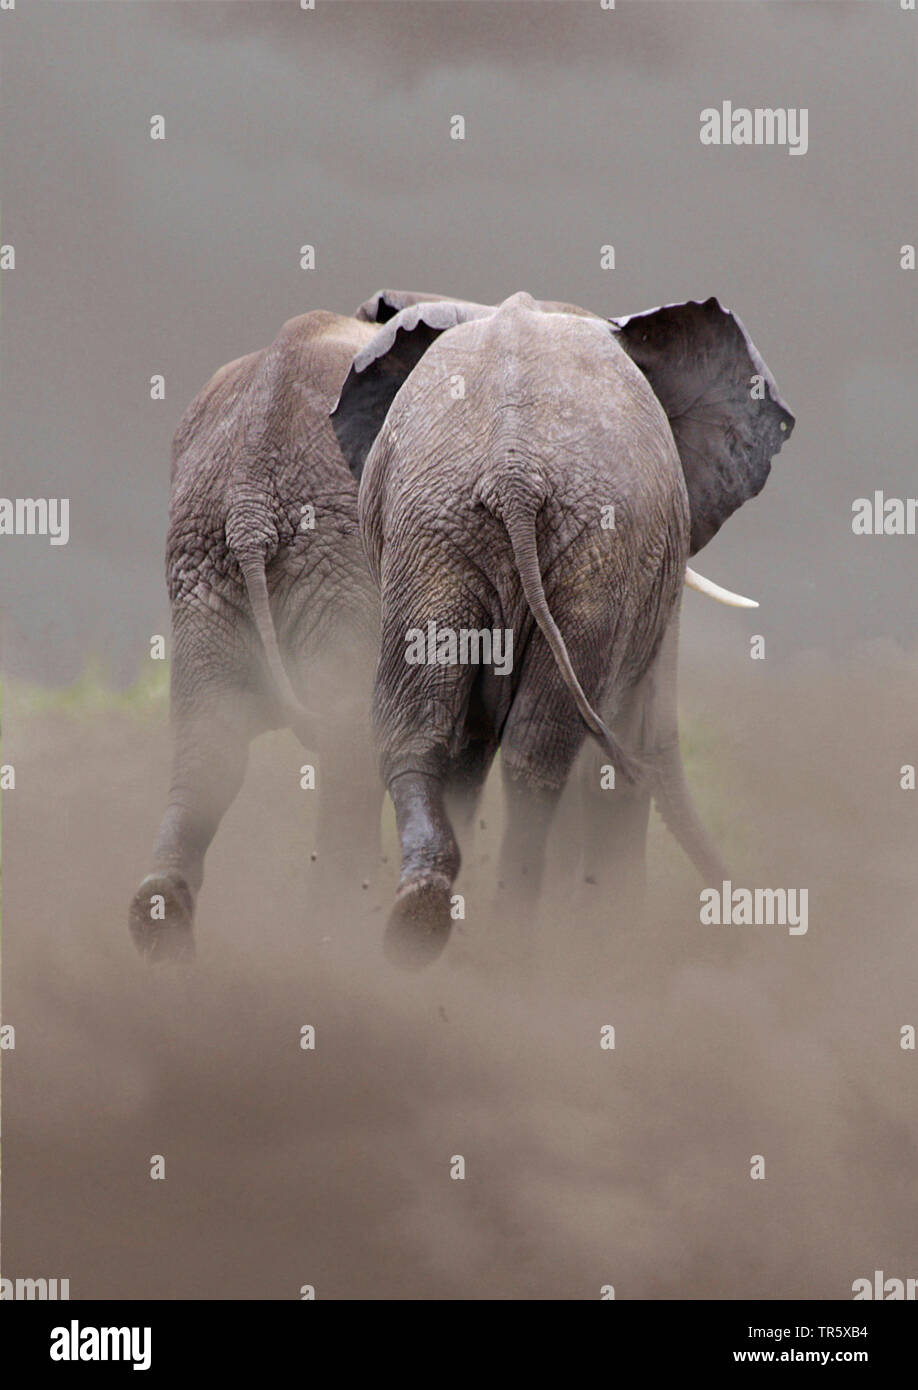 African elephant (Loxodonta africana), two fleeing elephants, rear view in a dustcloud Stock Photo